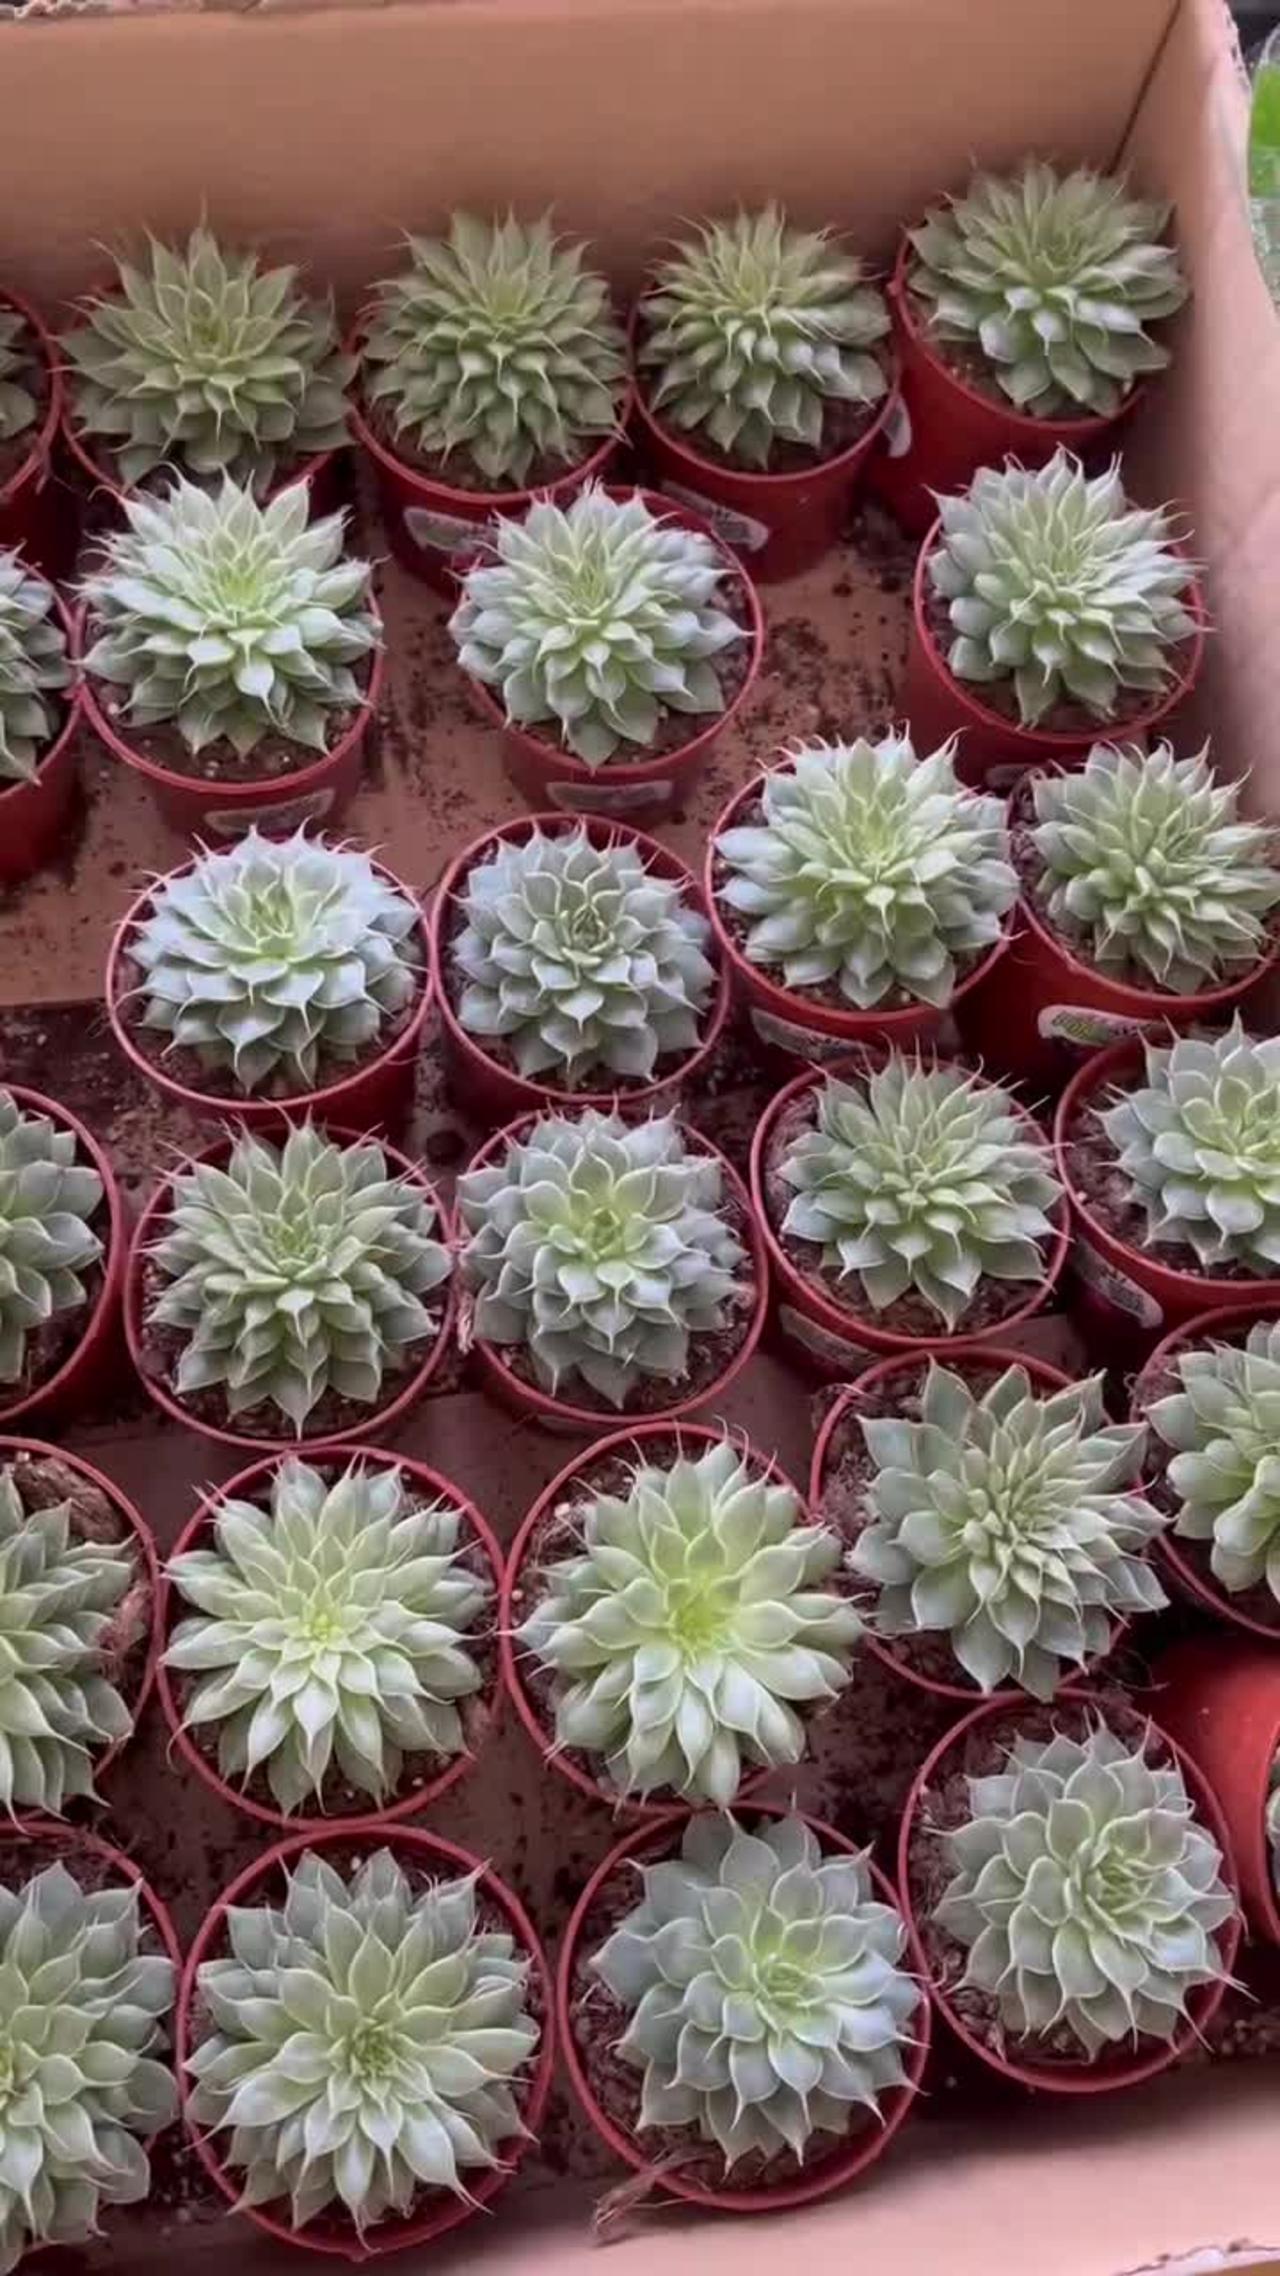 neatly arranged green plants